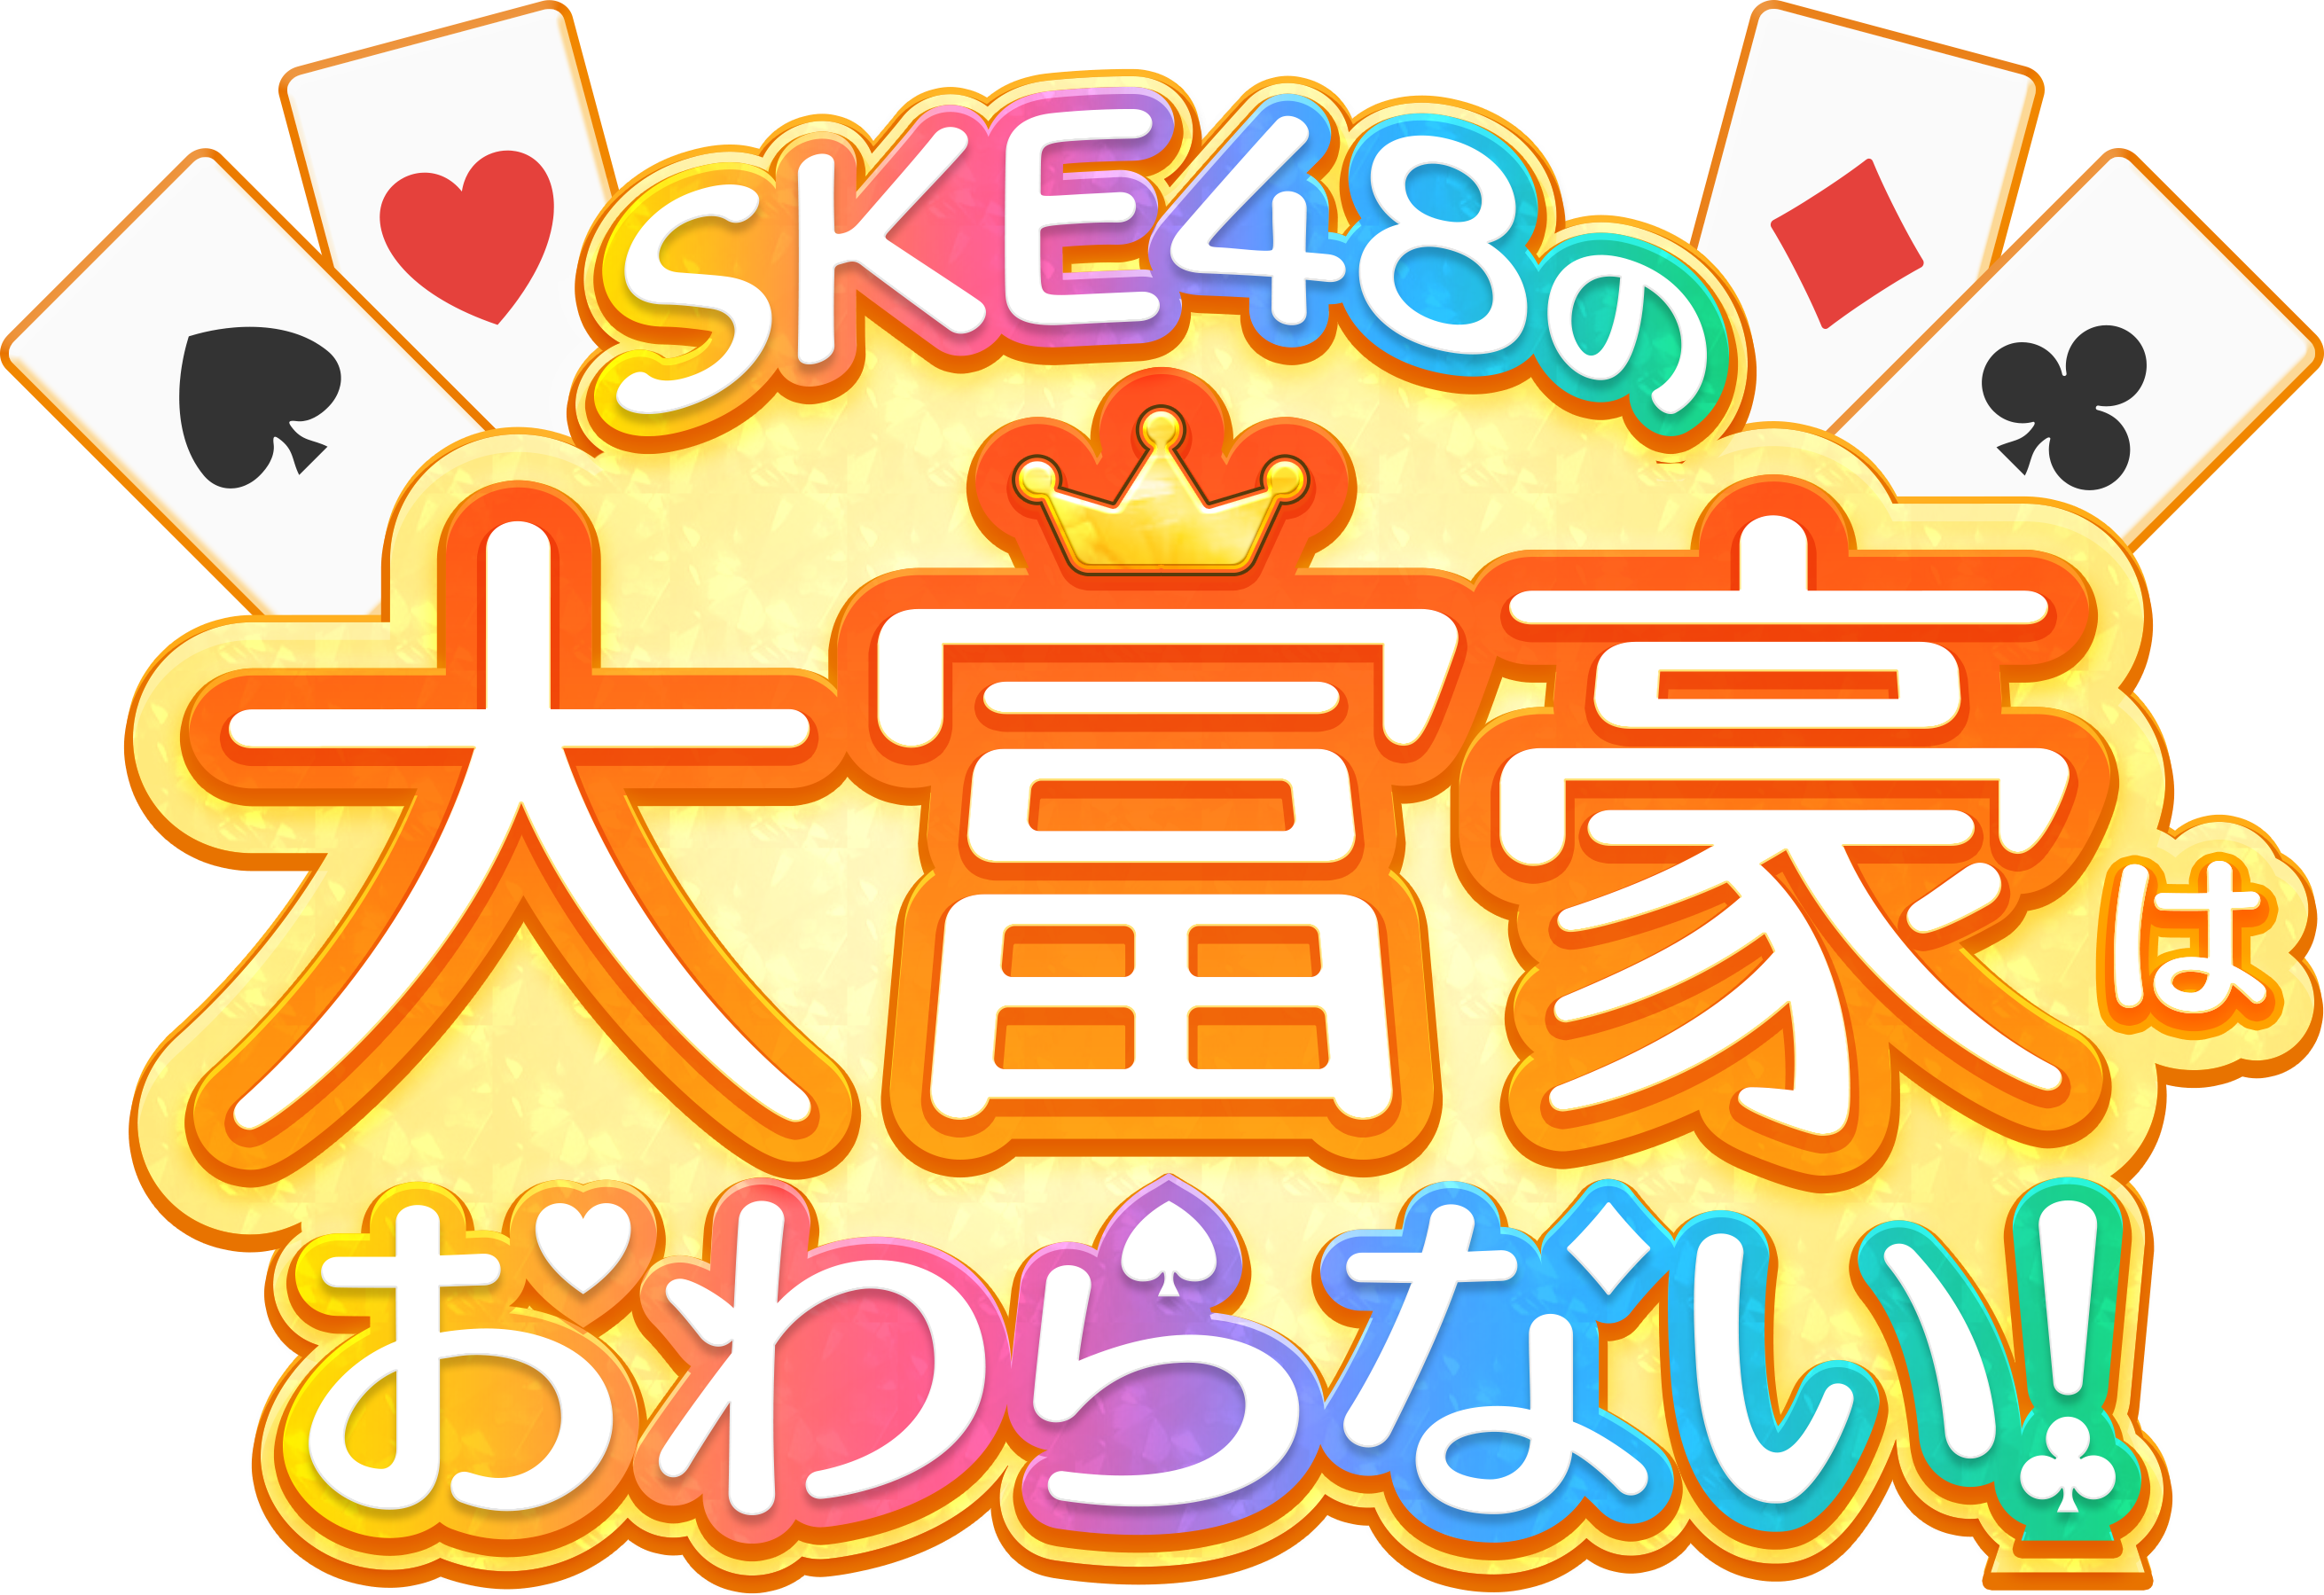 Ske48の公式ゲームアプリ Ske48の大富豪はおわらない 中京テレビとのコラボイベント テレビ番組出演権争奪戦 株式会社レッドクイーン のプレスリリース